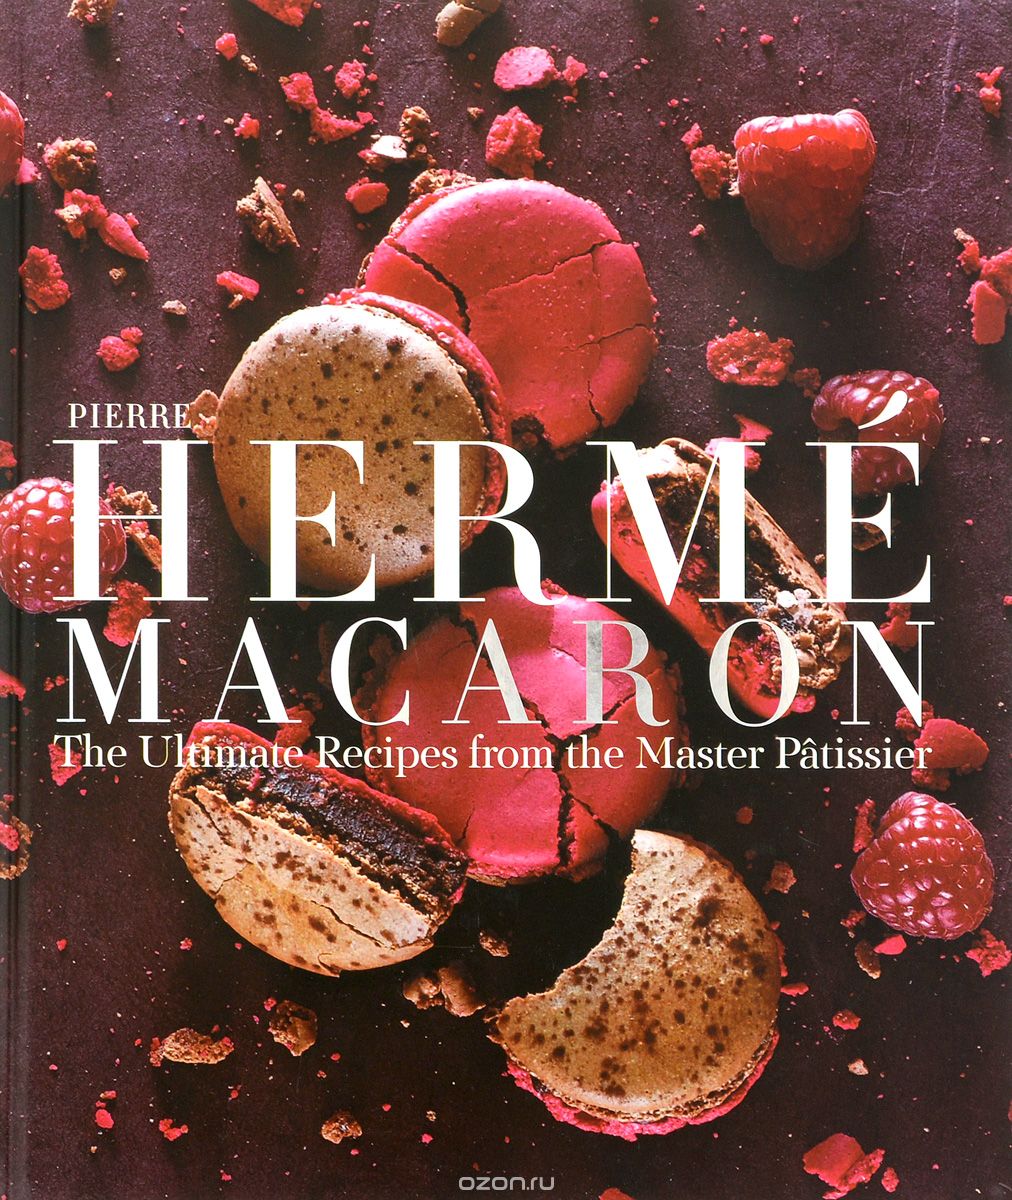 Скачать книгу "Pierre Herme Macaron"